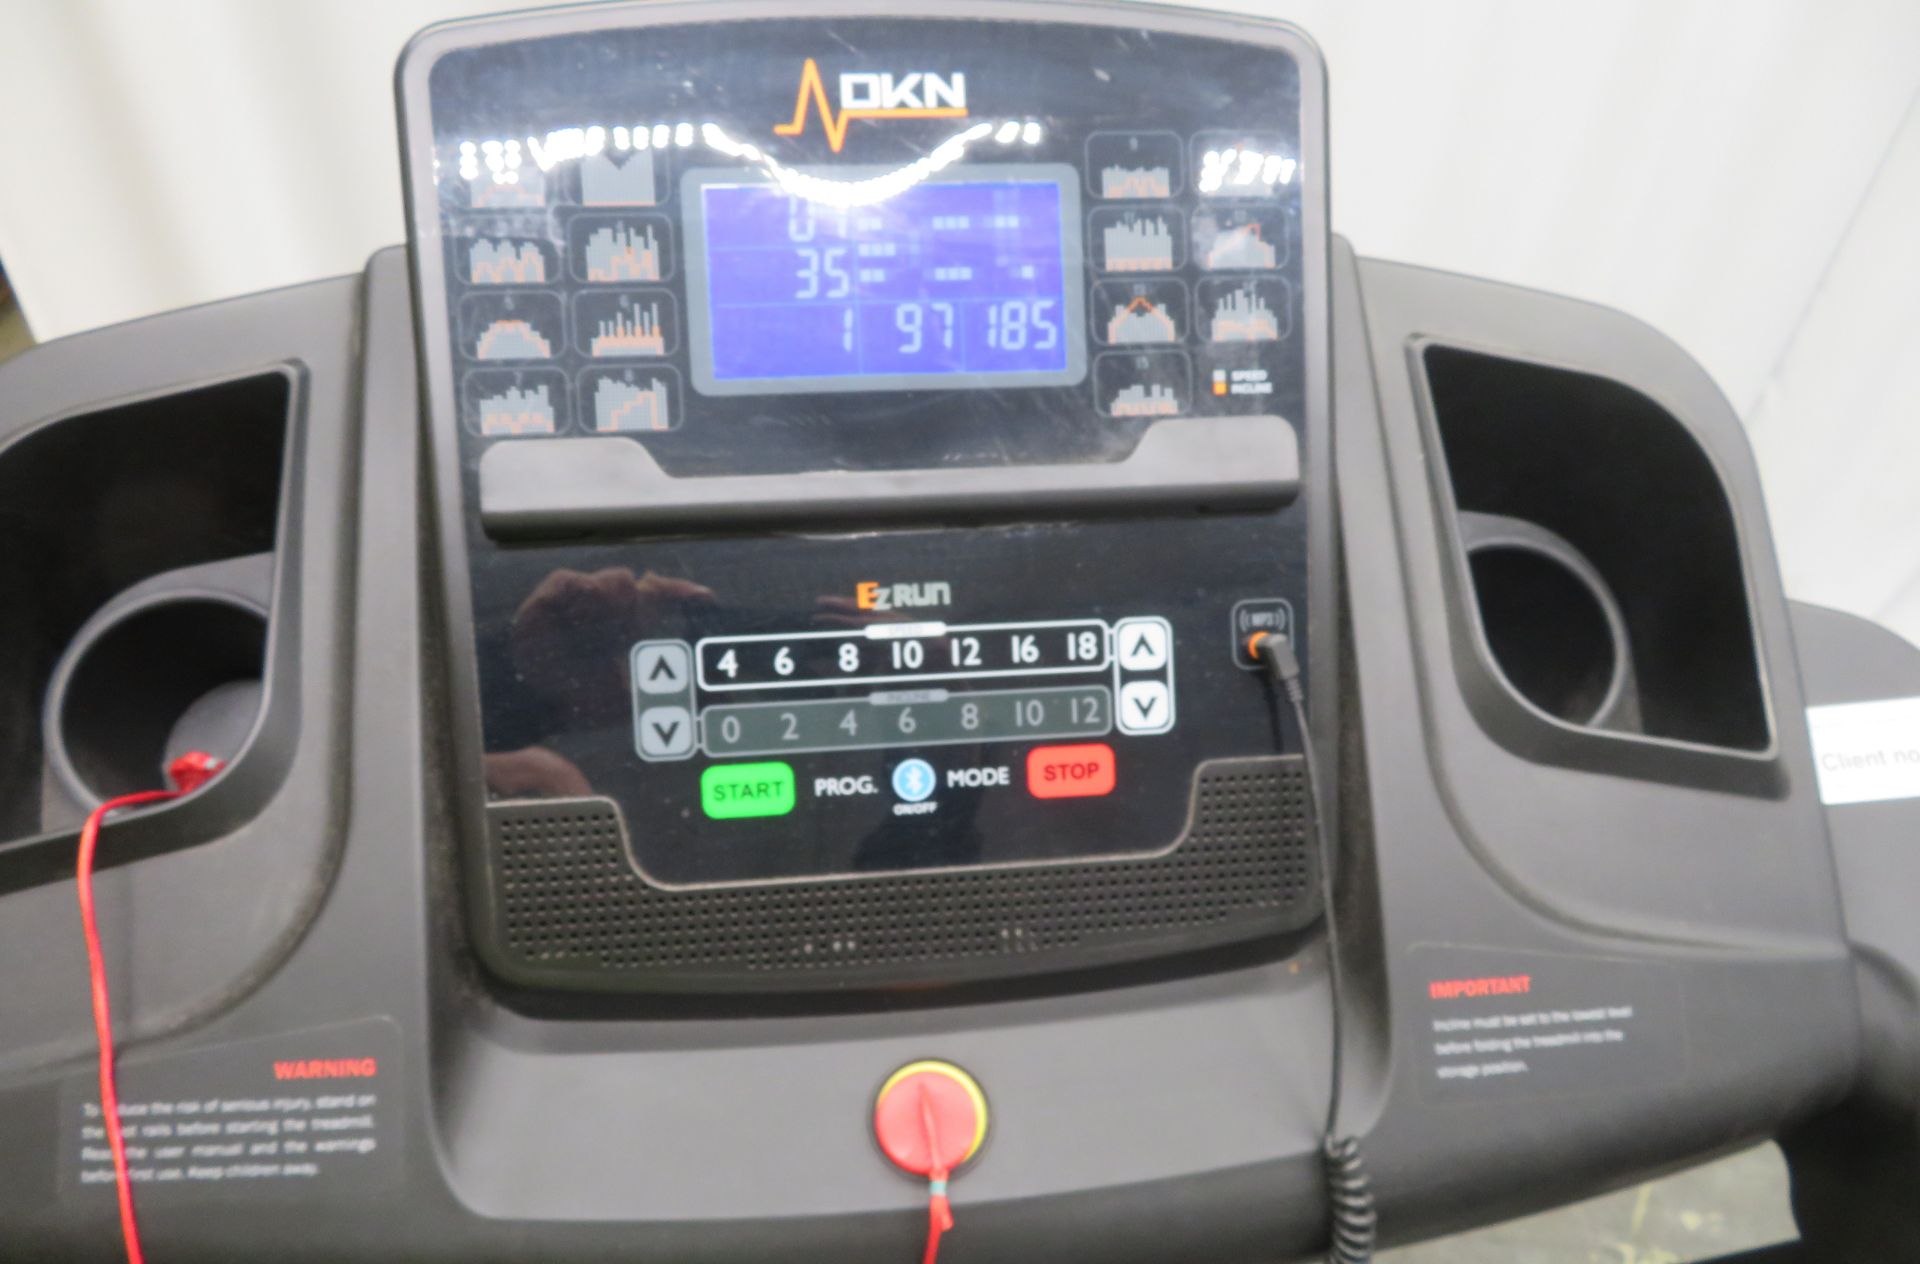 DKN EZ Run Foldable Treadmill. - Image 4 of 10